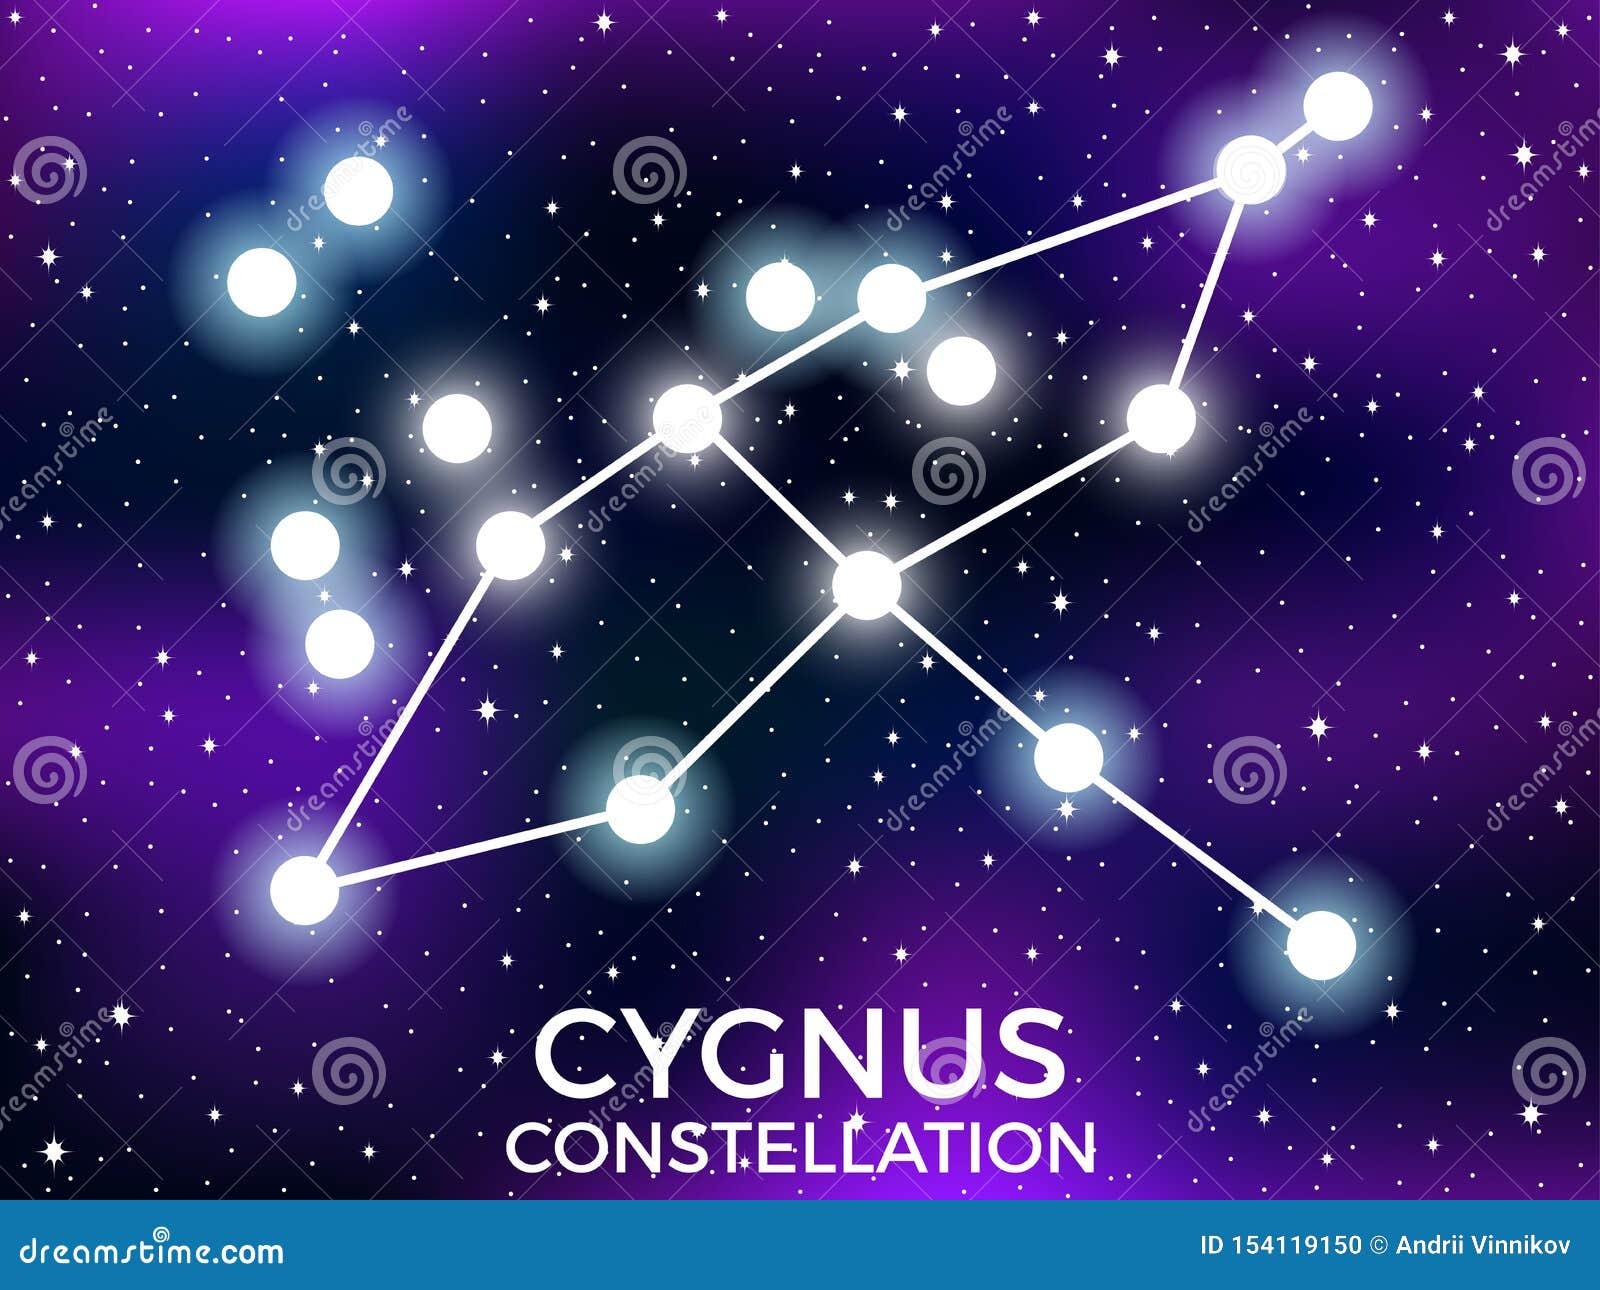 Constellation cygnus Cygnus, the